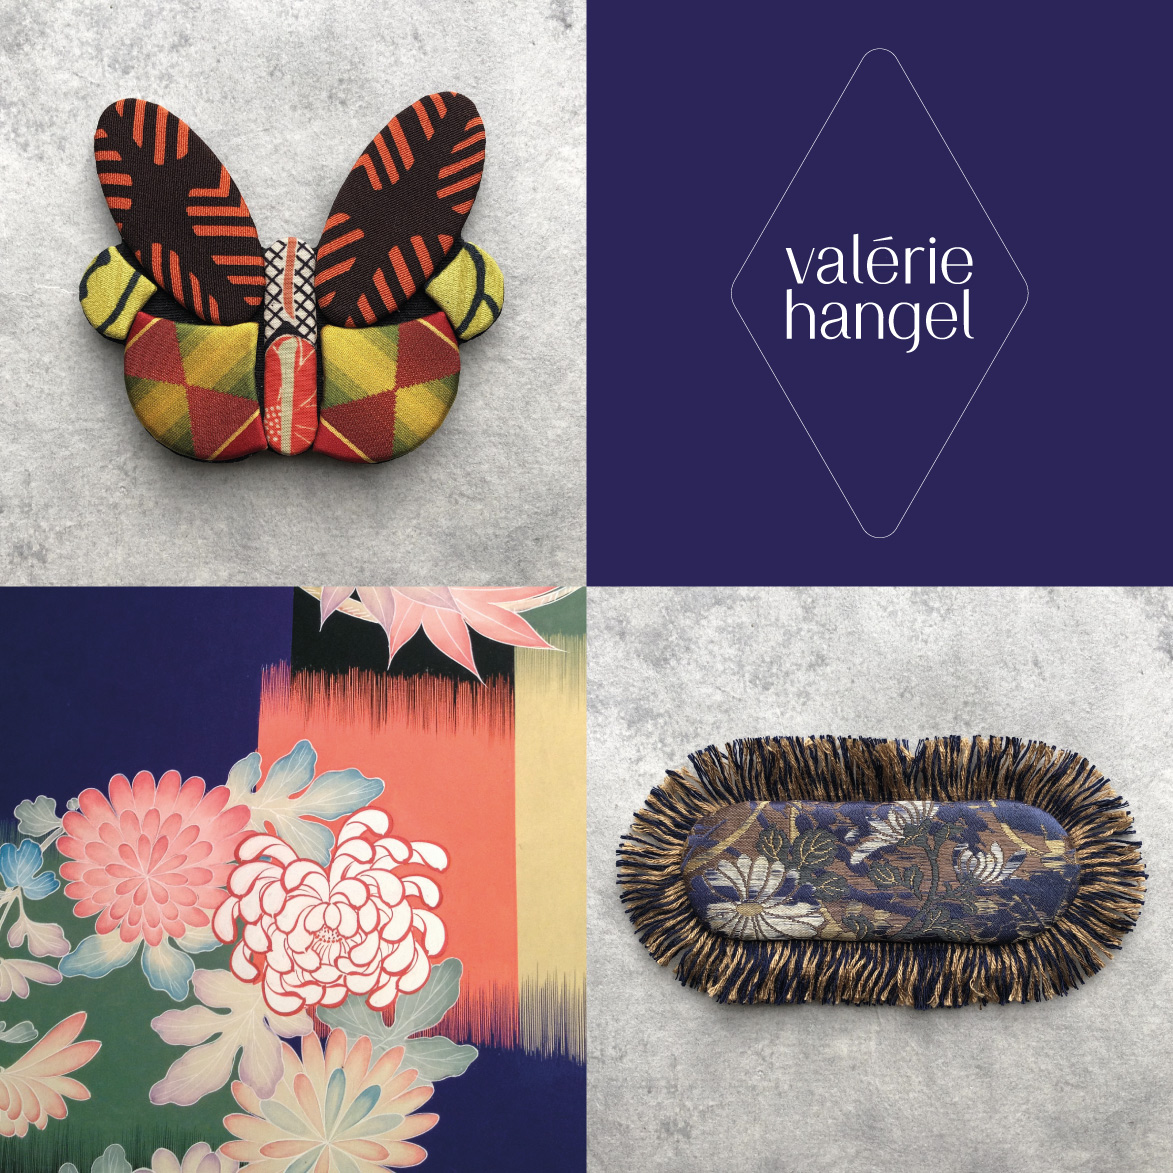 brooches-winter-exhibition-sik-kimonos-valerie-hangel-galerie-h